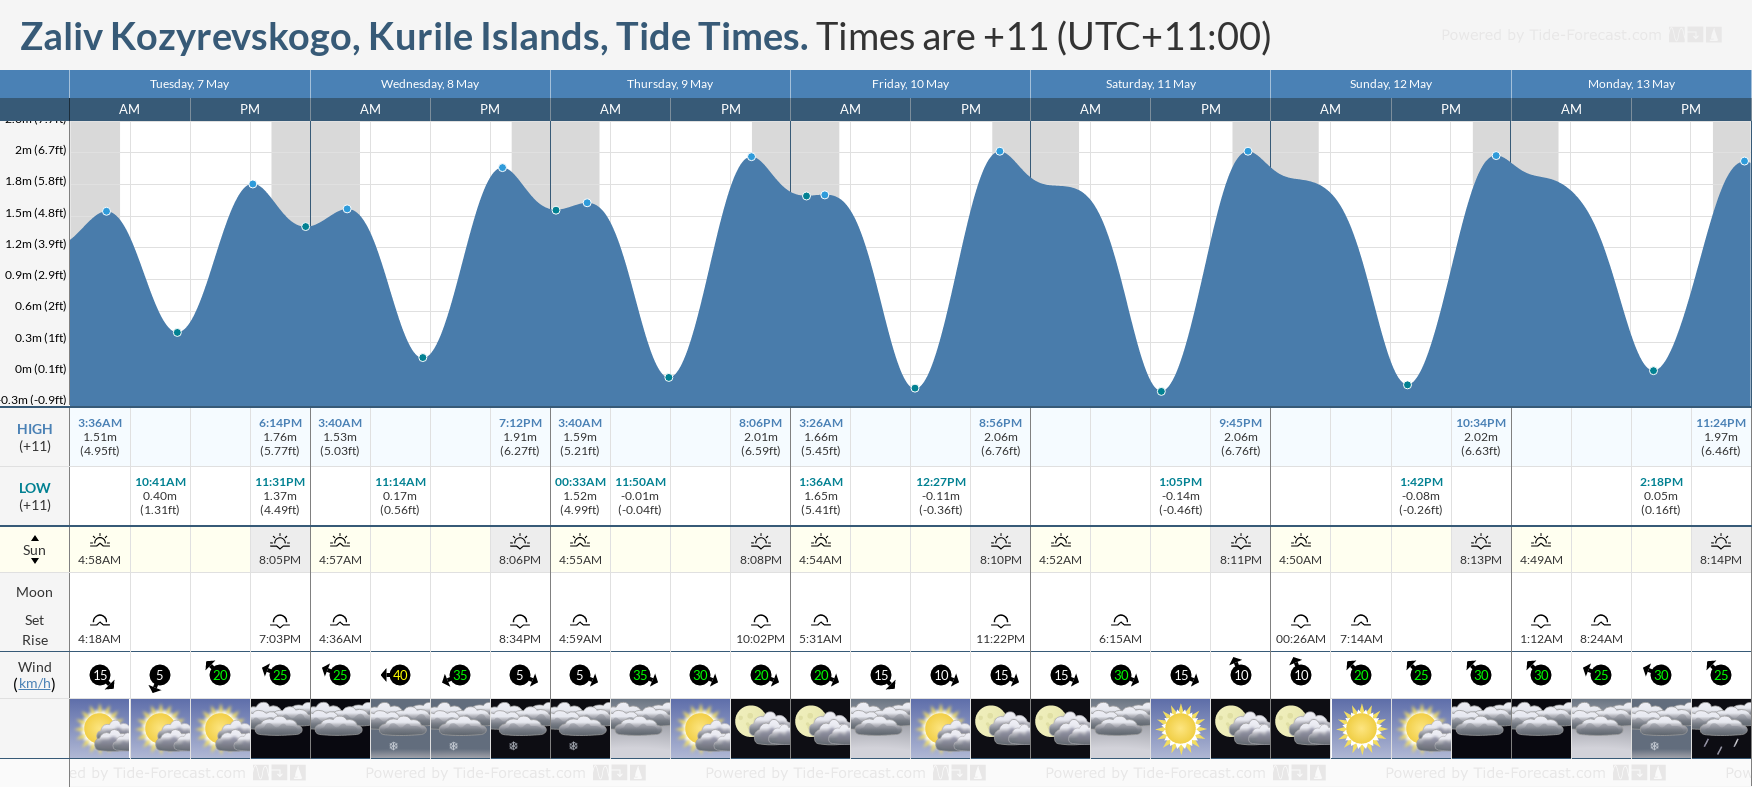 Zaliv Kozyrevskogo, Kurile Islands Tide Chart including high and low tide tide times for the next 7 days